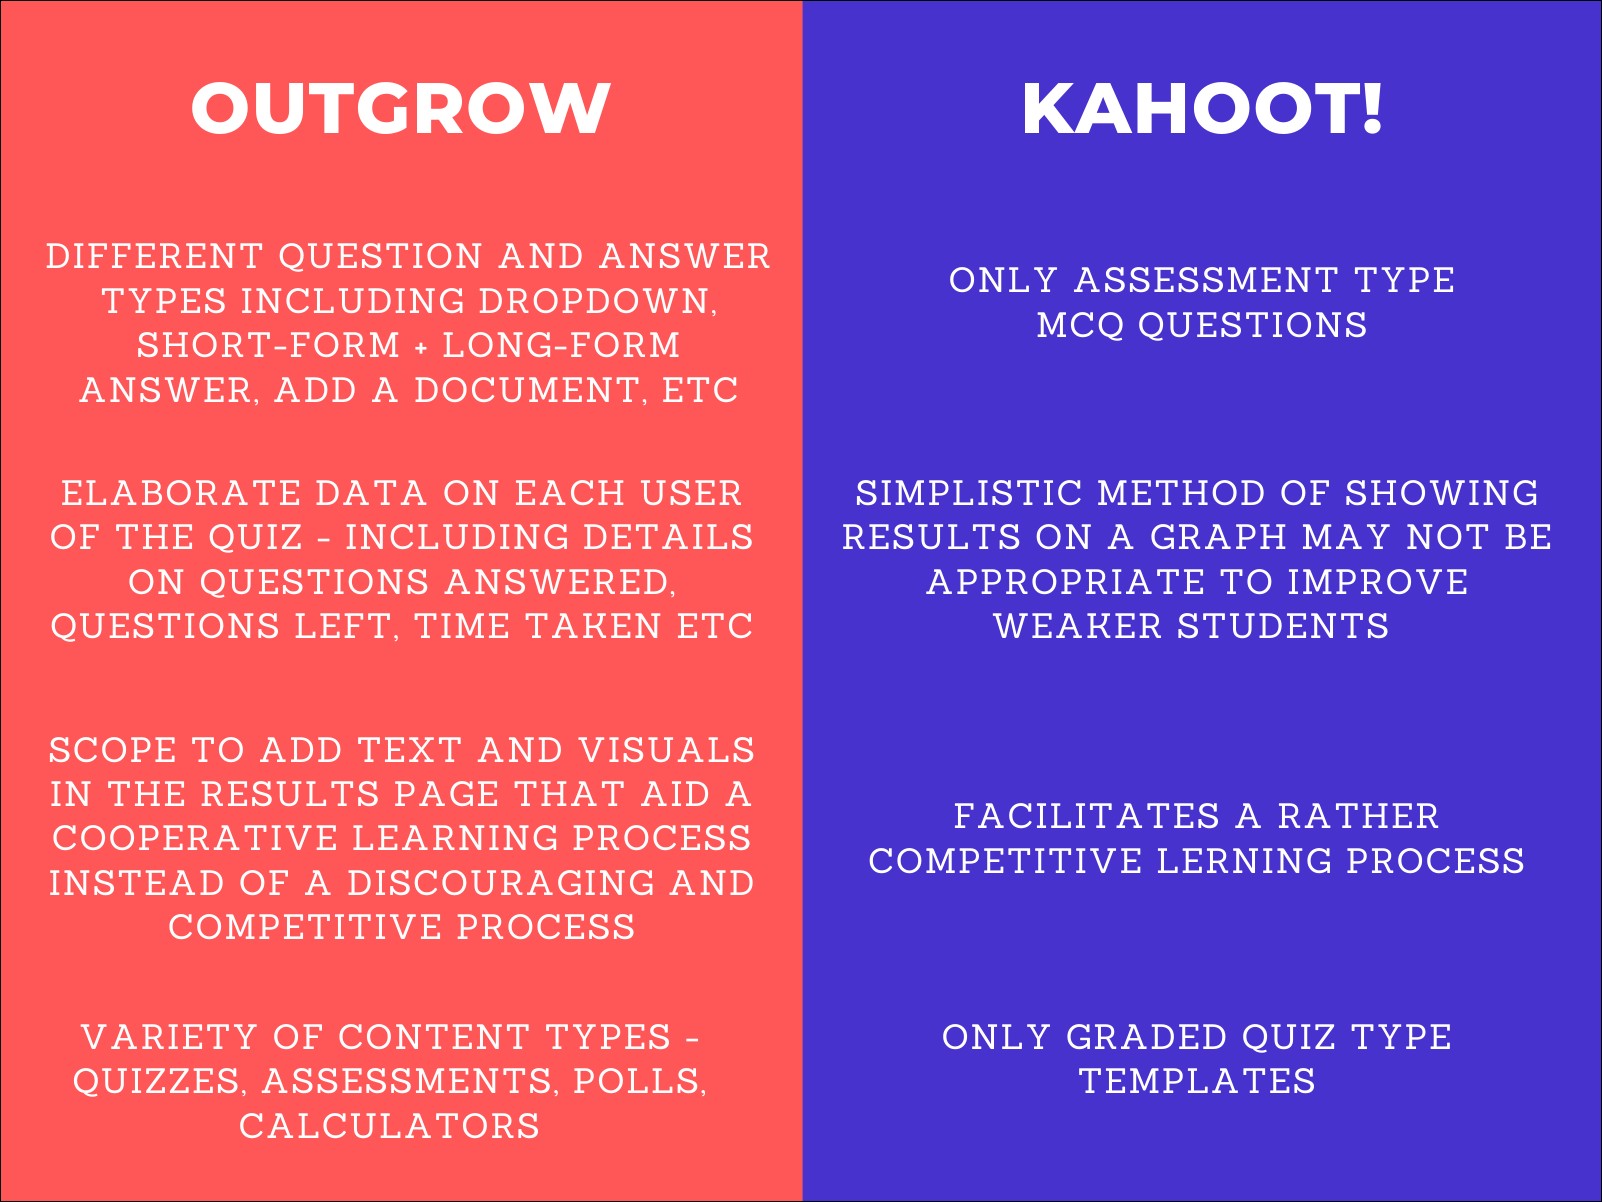 Kahoot-style quiz